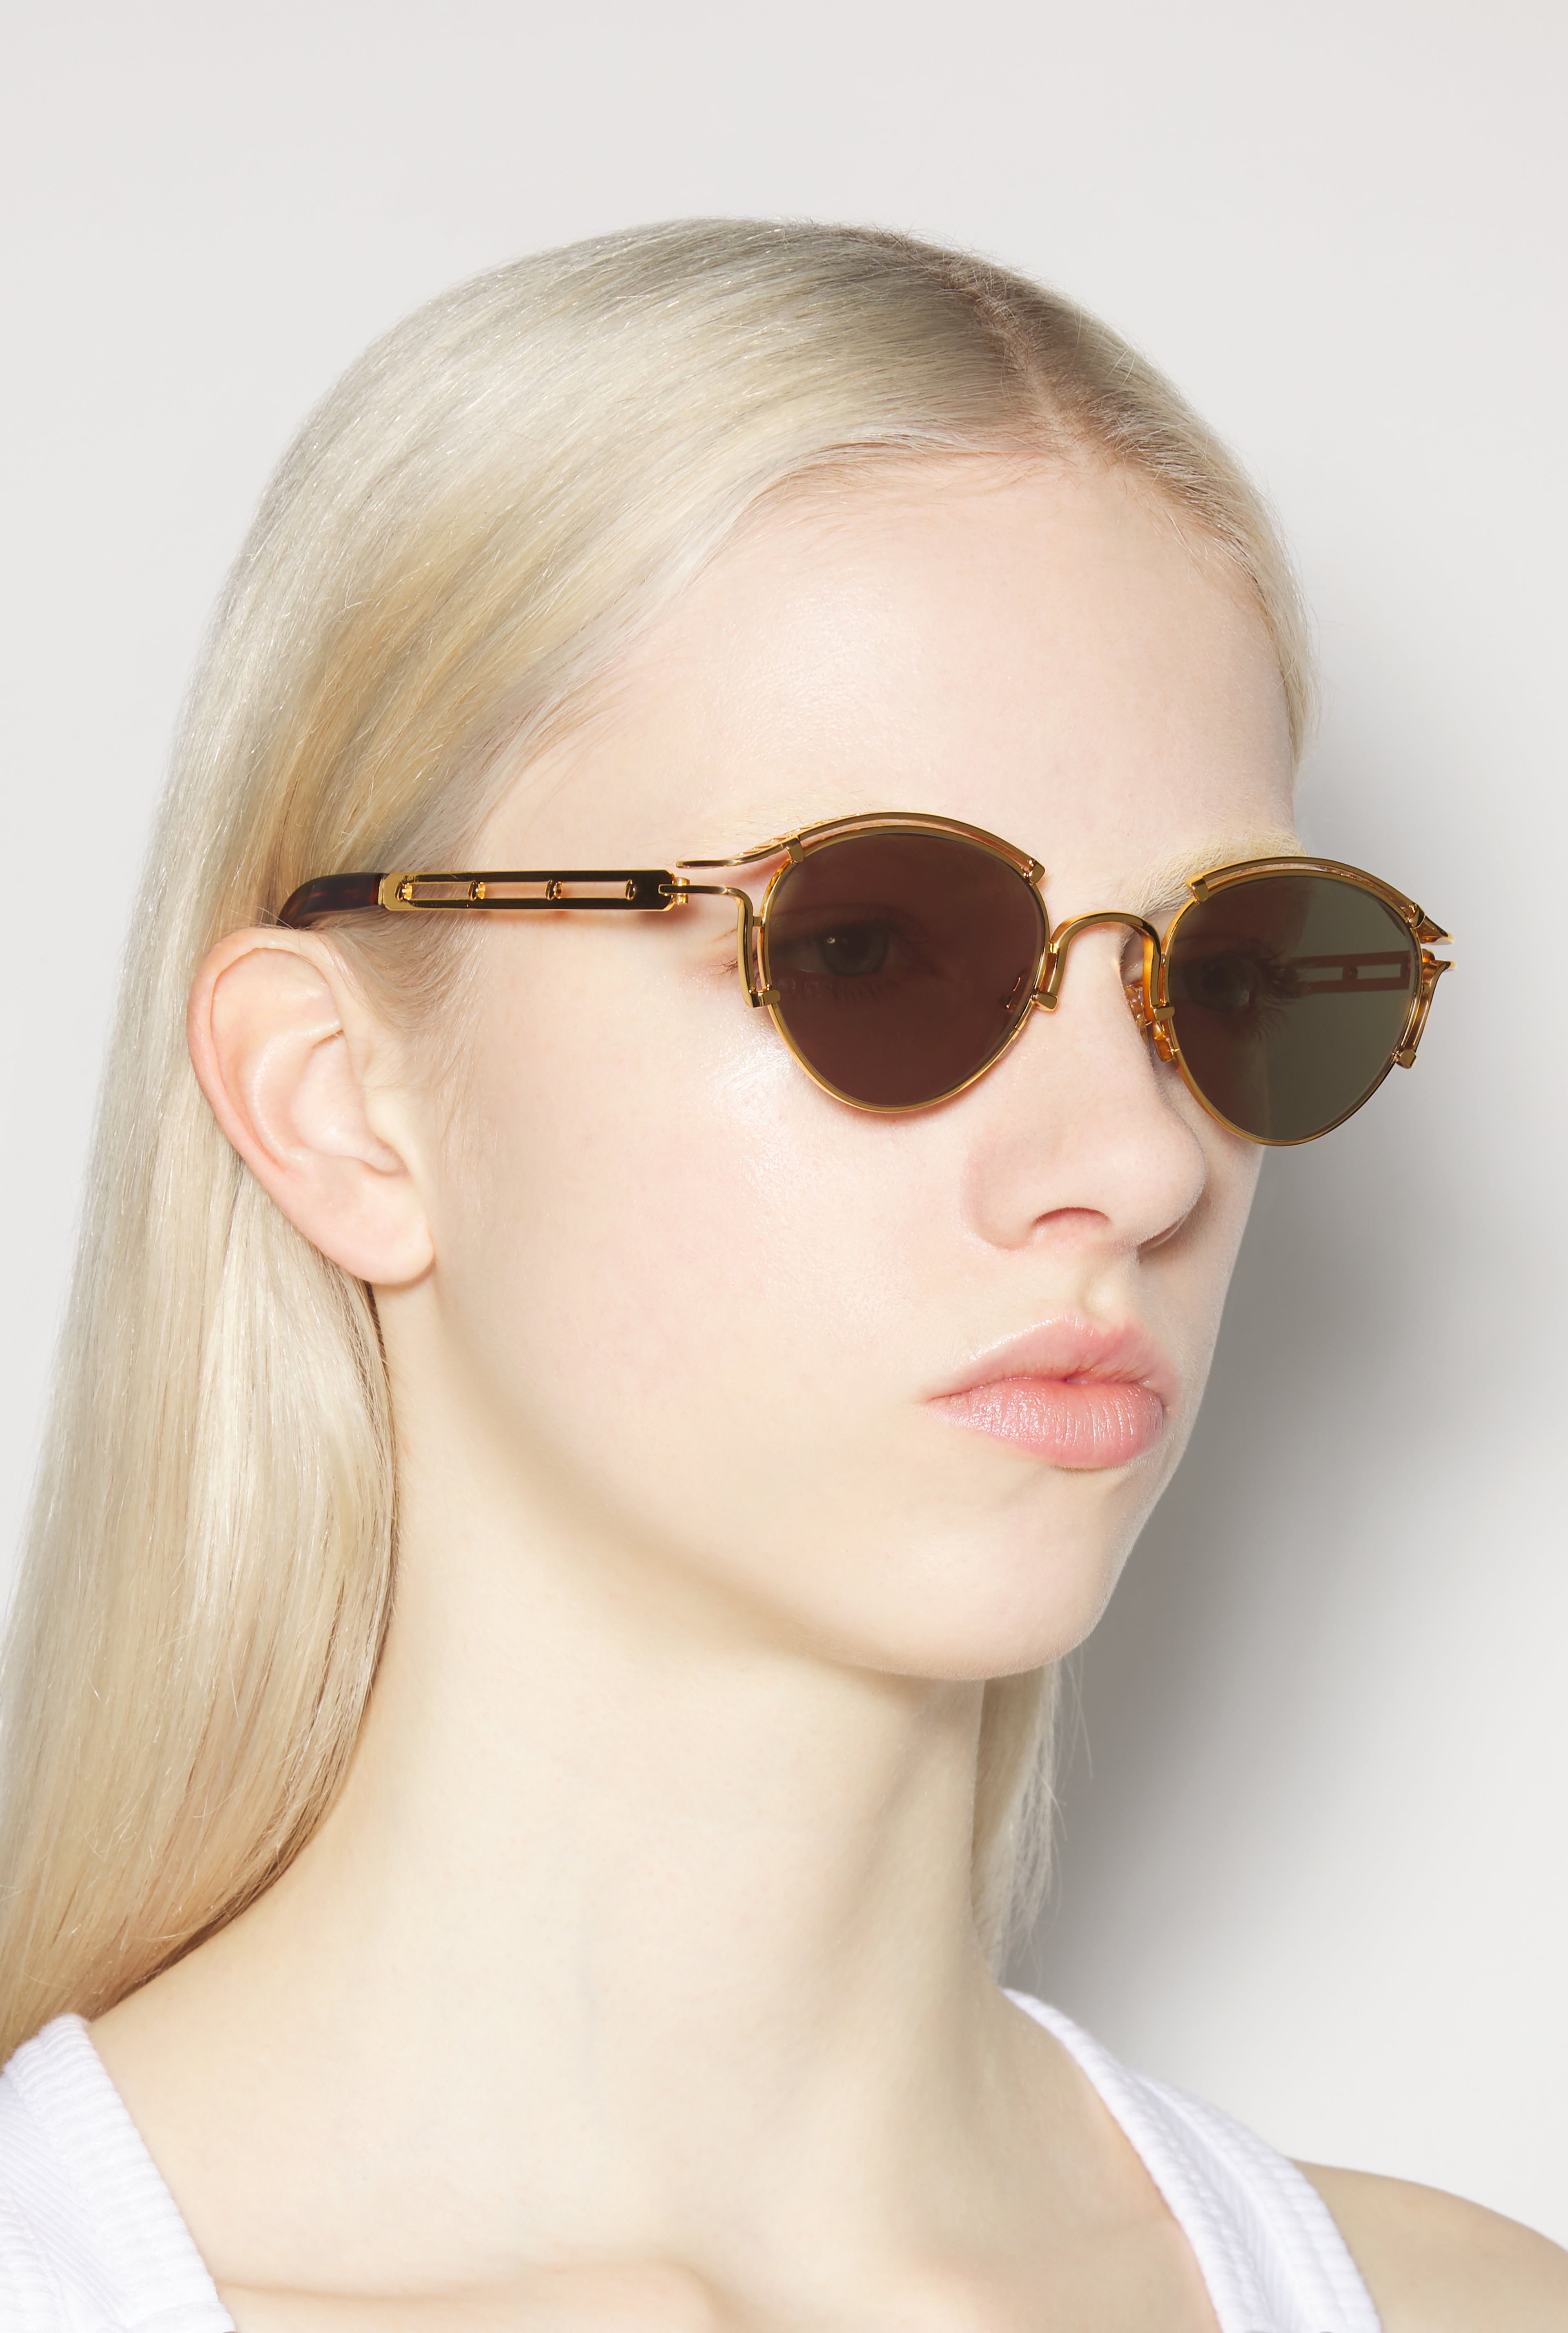 The Gold 56-5102 Sunglasses